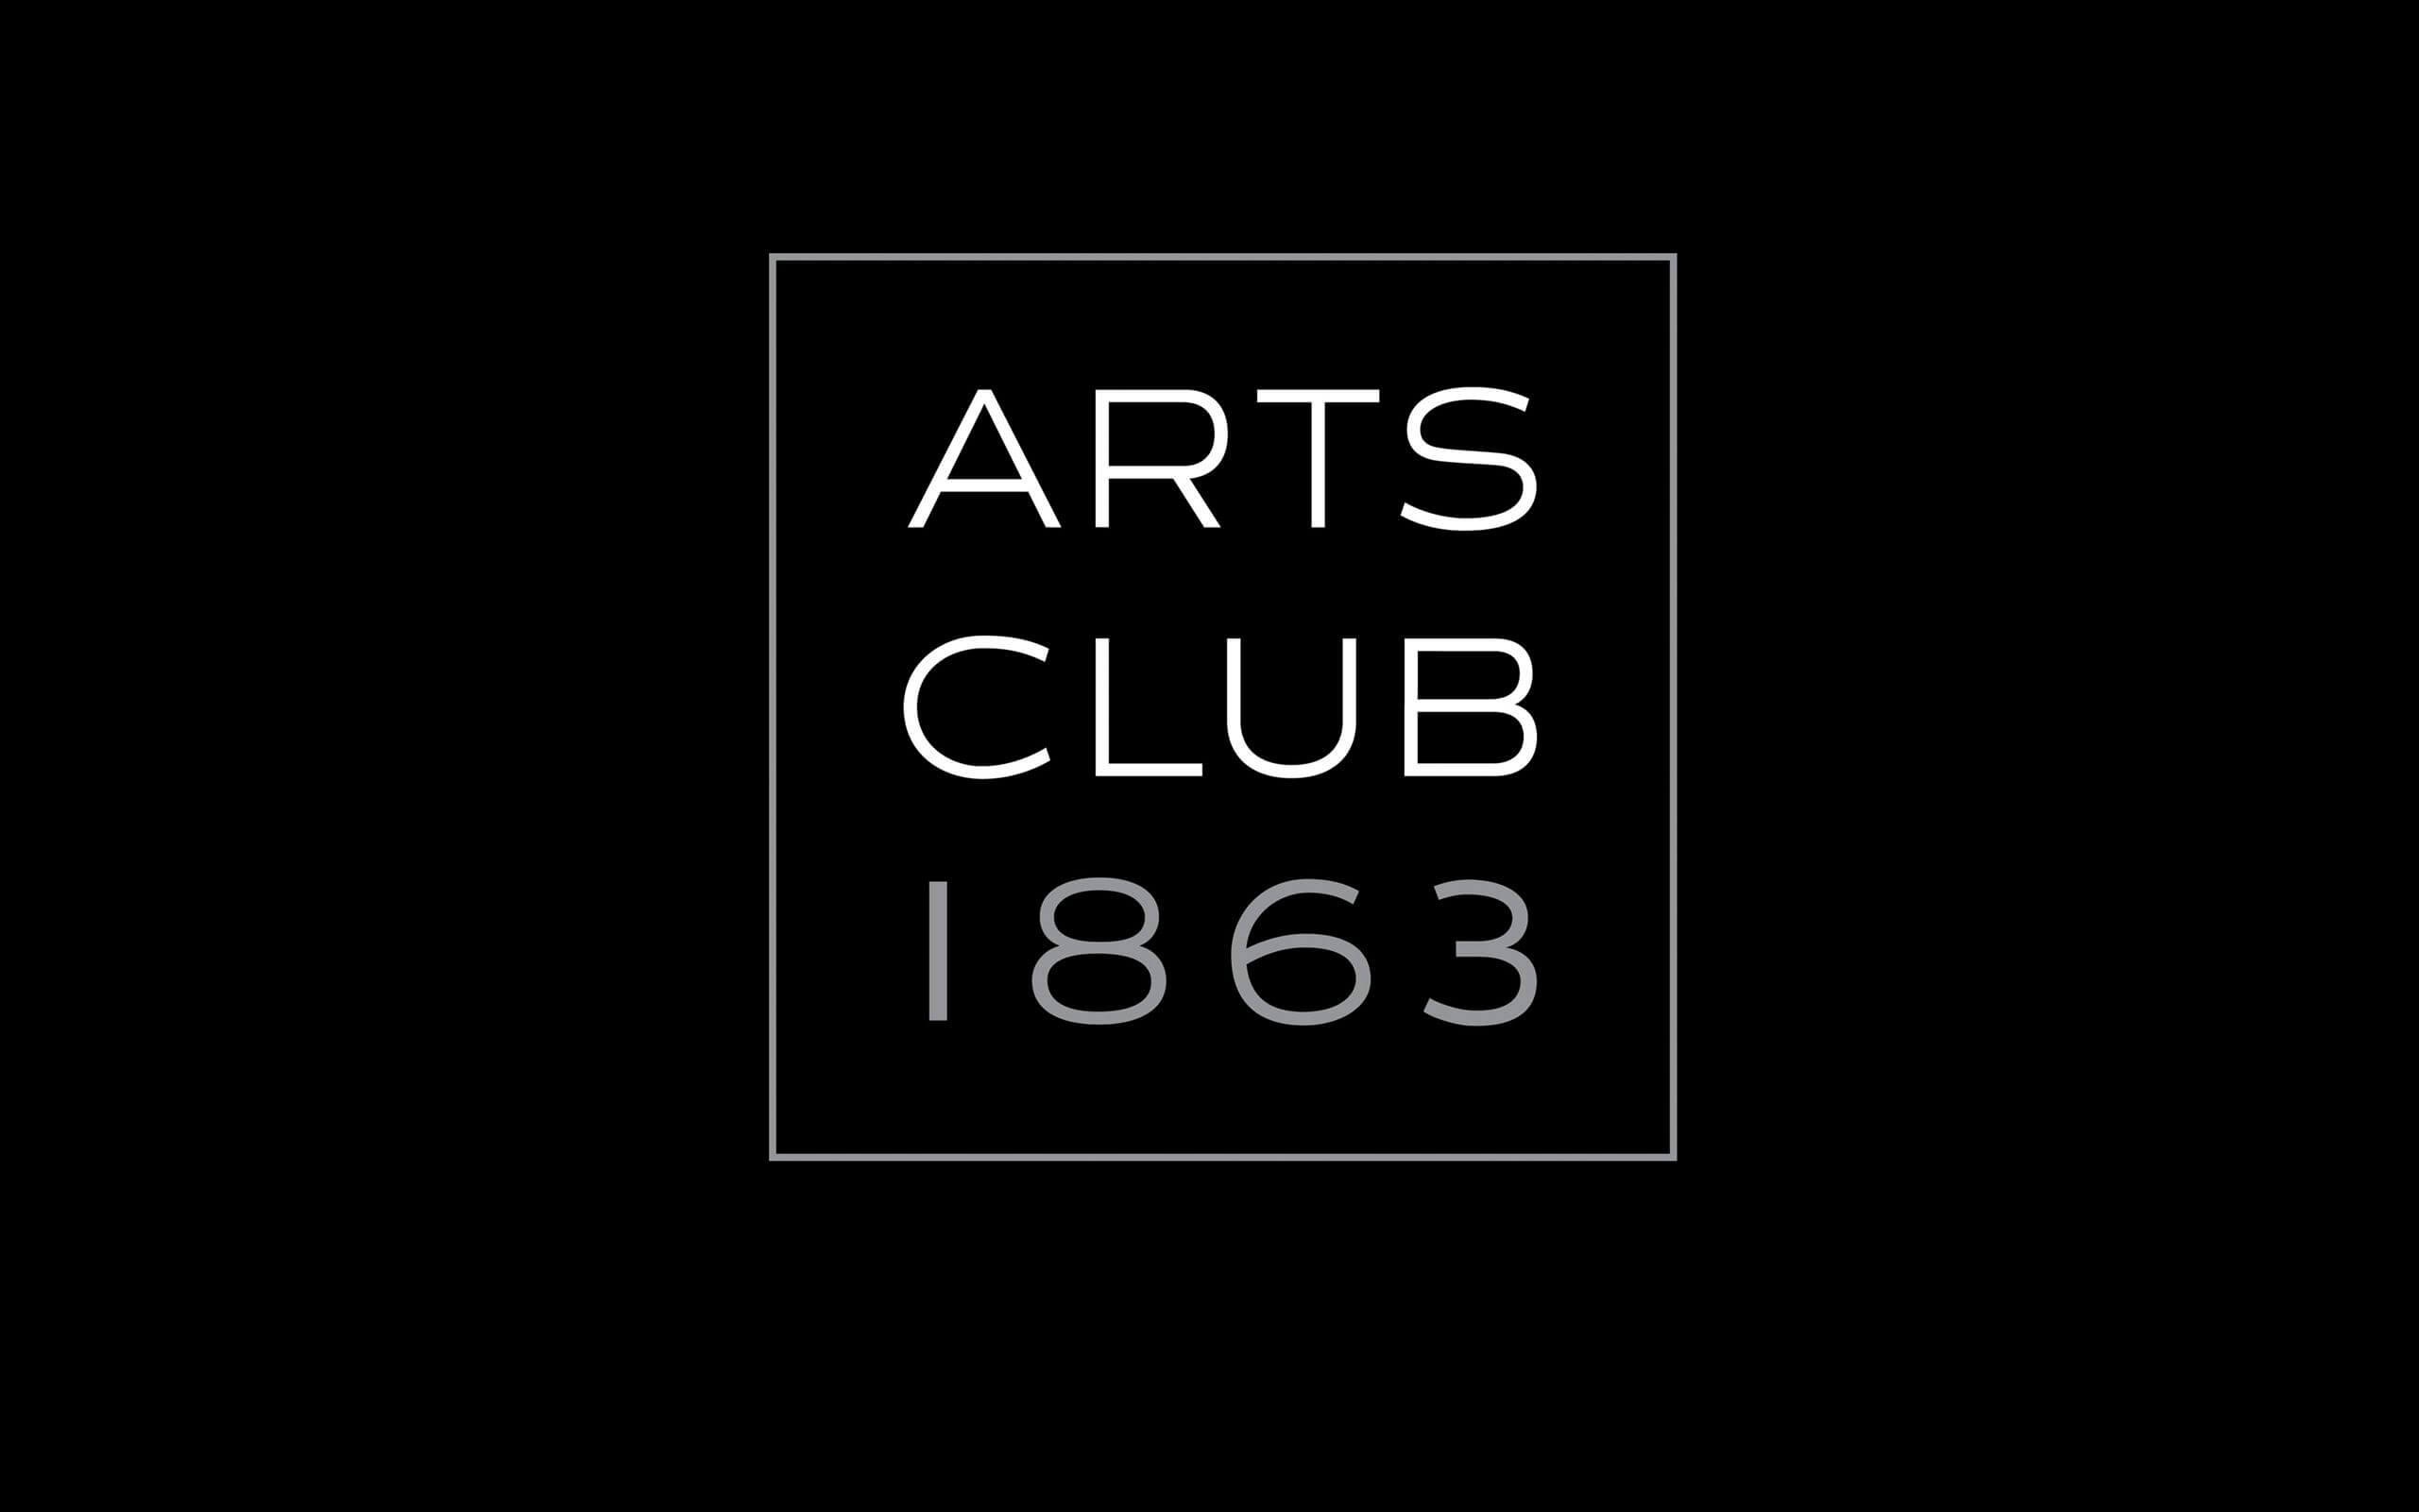 The Arts Club Mayfair London logo